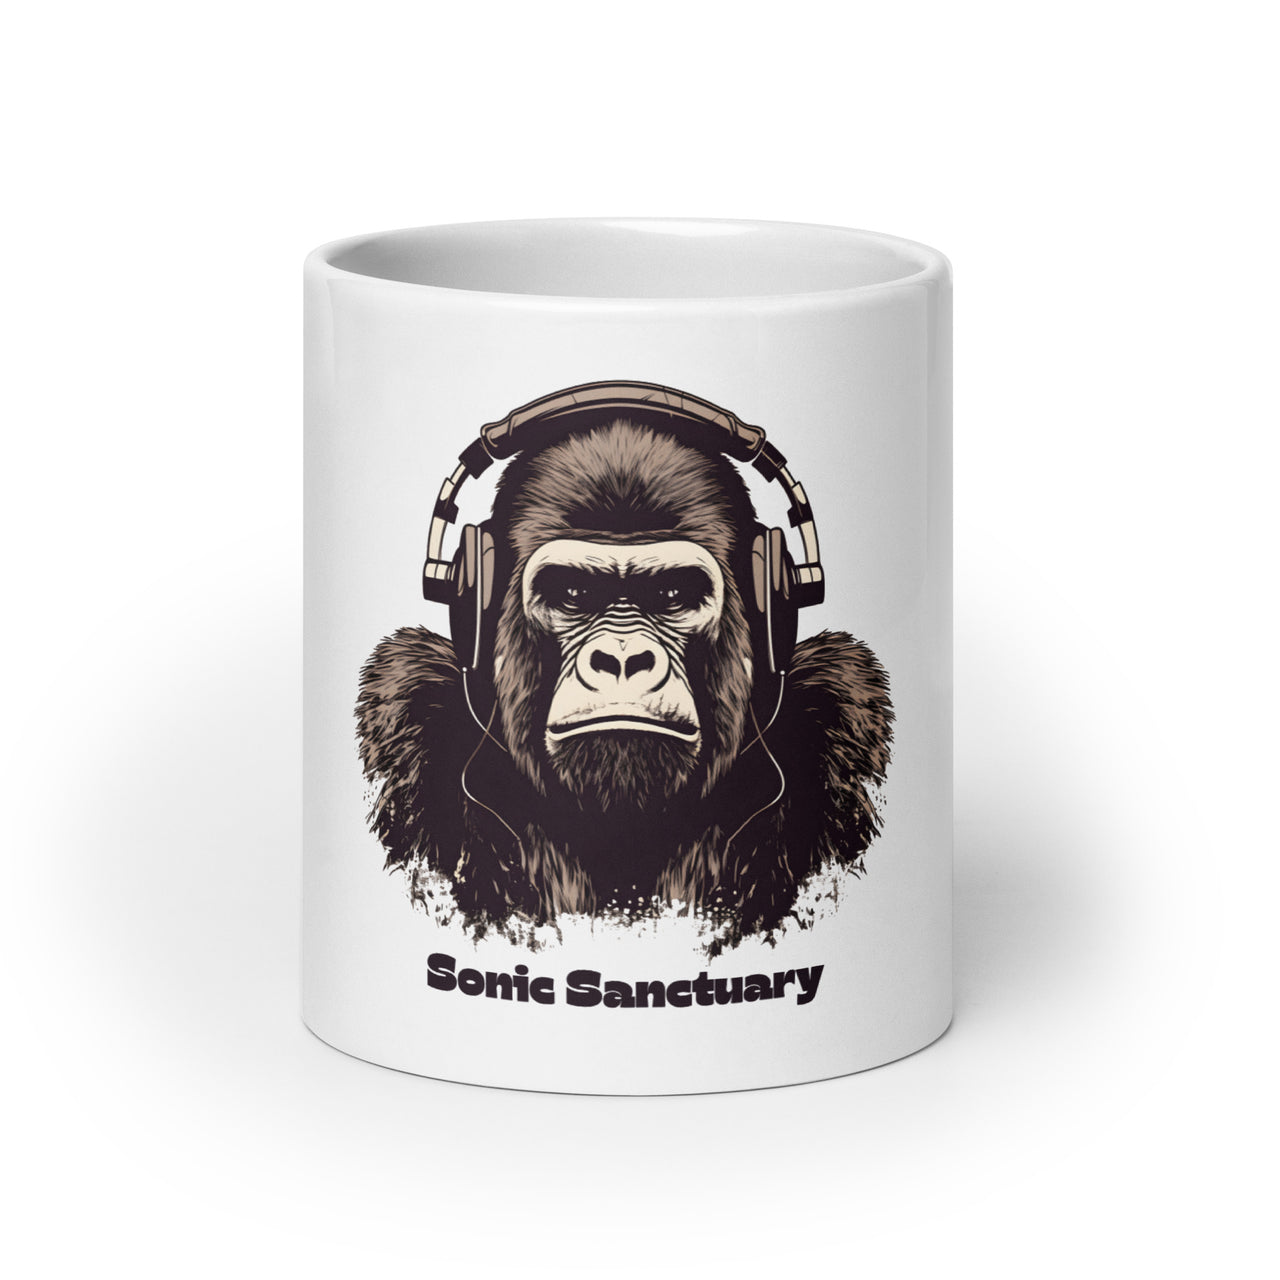 Sonic Sanctuary: Gorilla Headphones White Mug